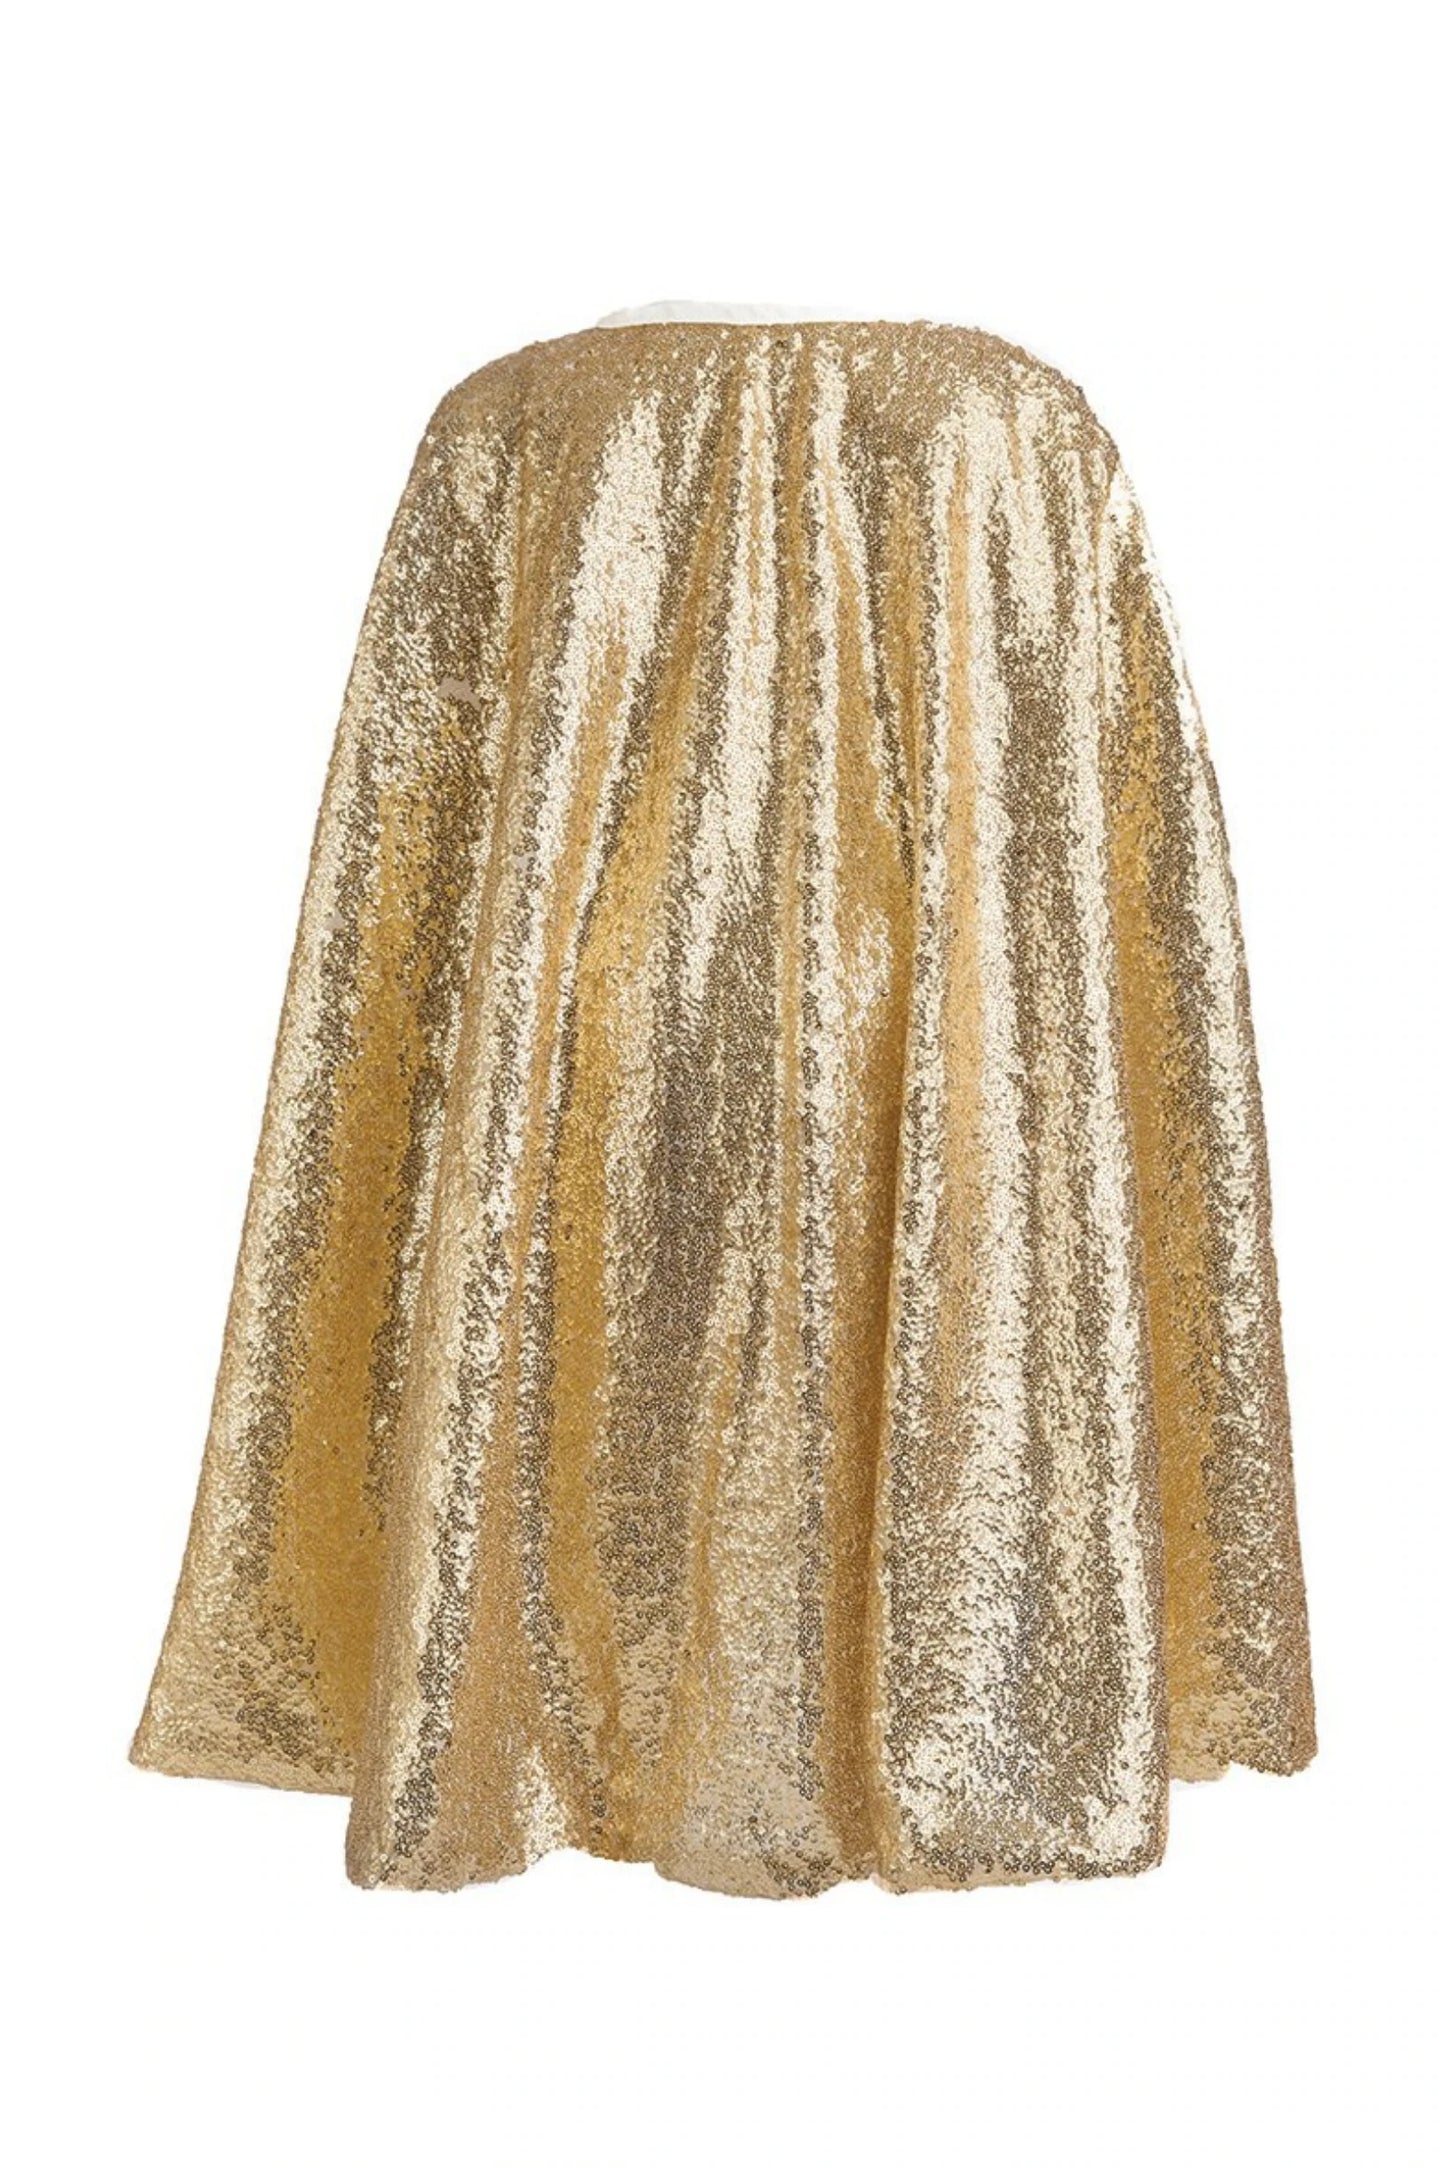 Dress Up - Gracious Gold Sequin Cape